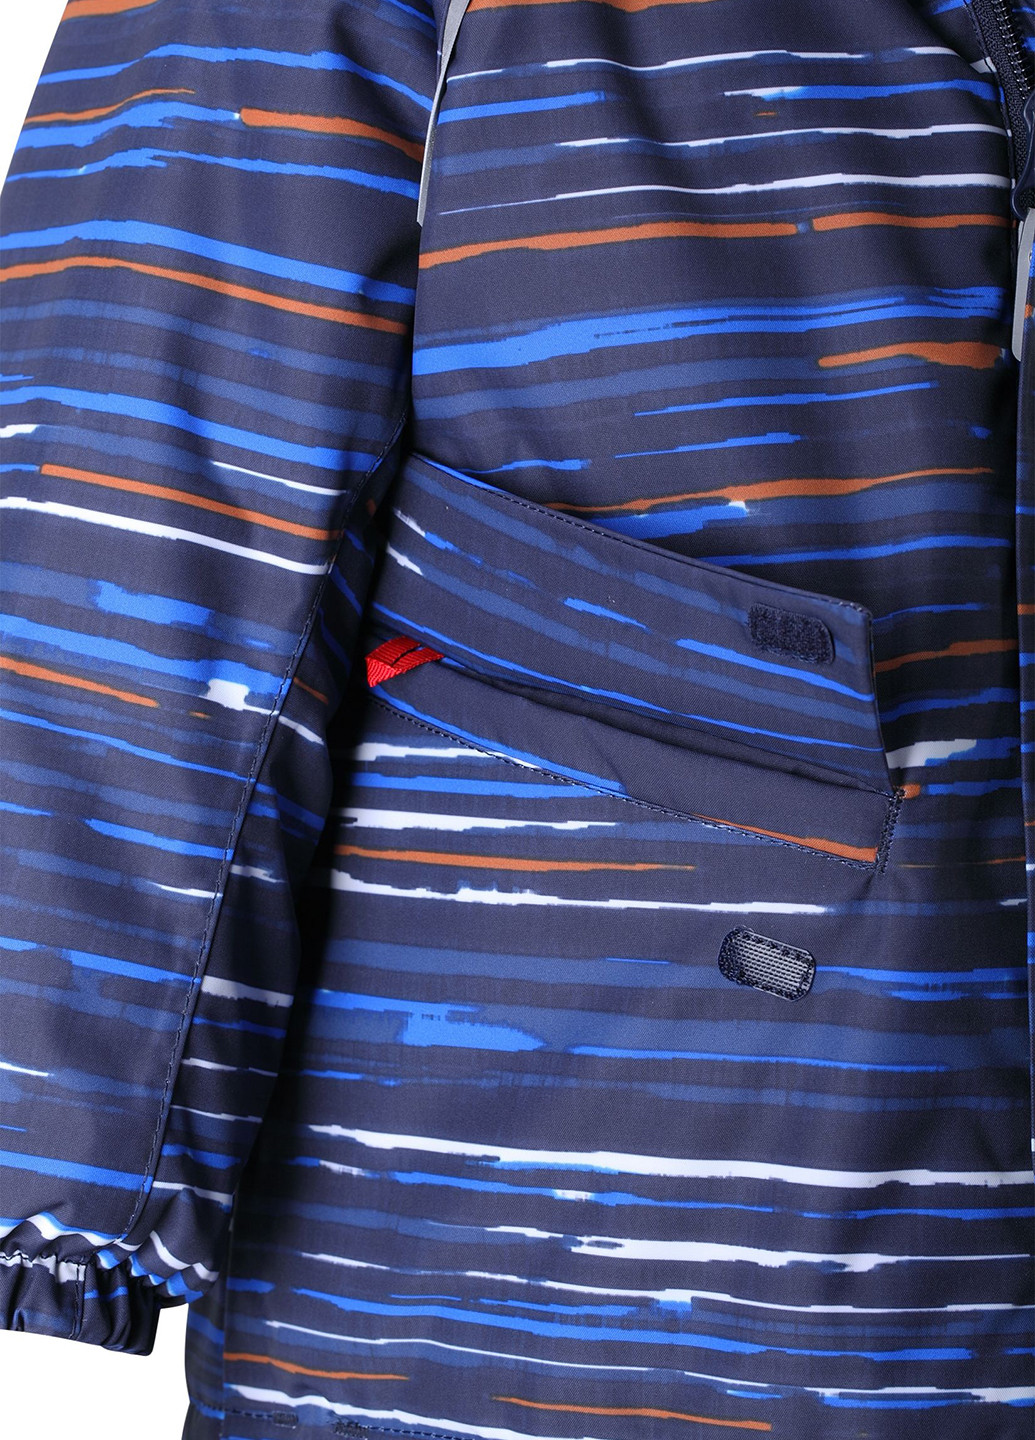 Темно-синий зимний комплект (куртка, комбинезон) Reima